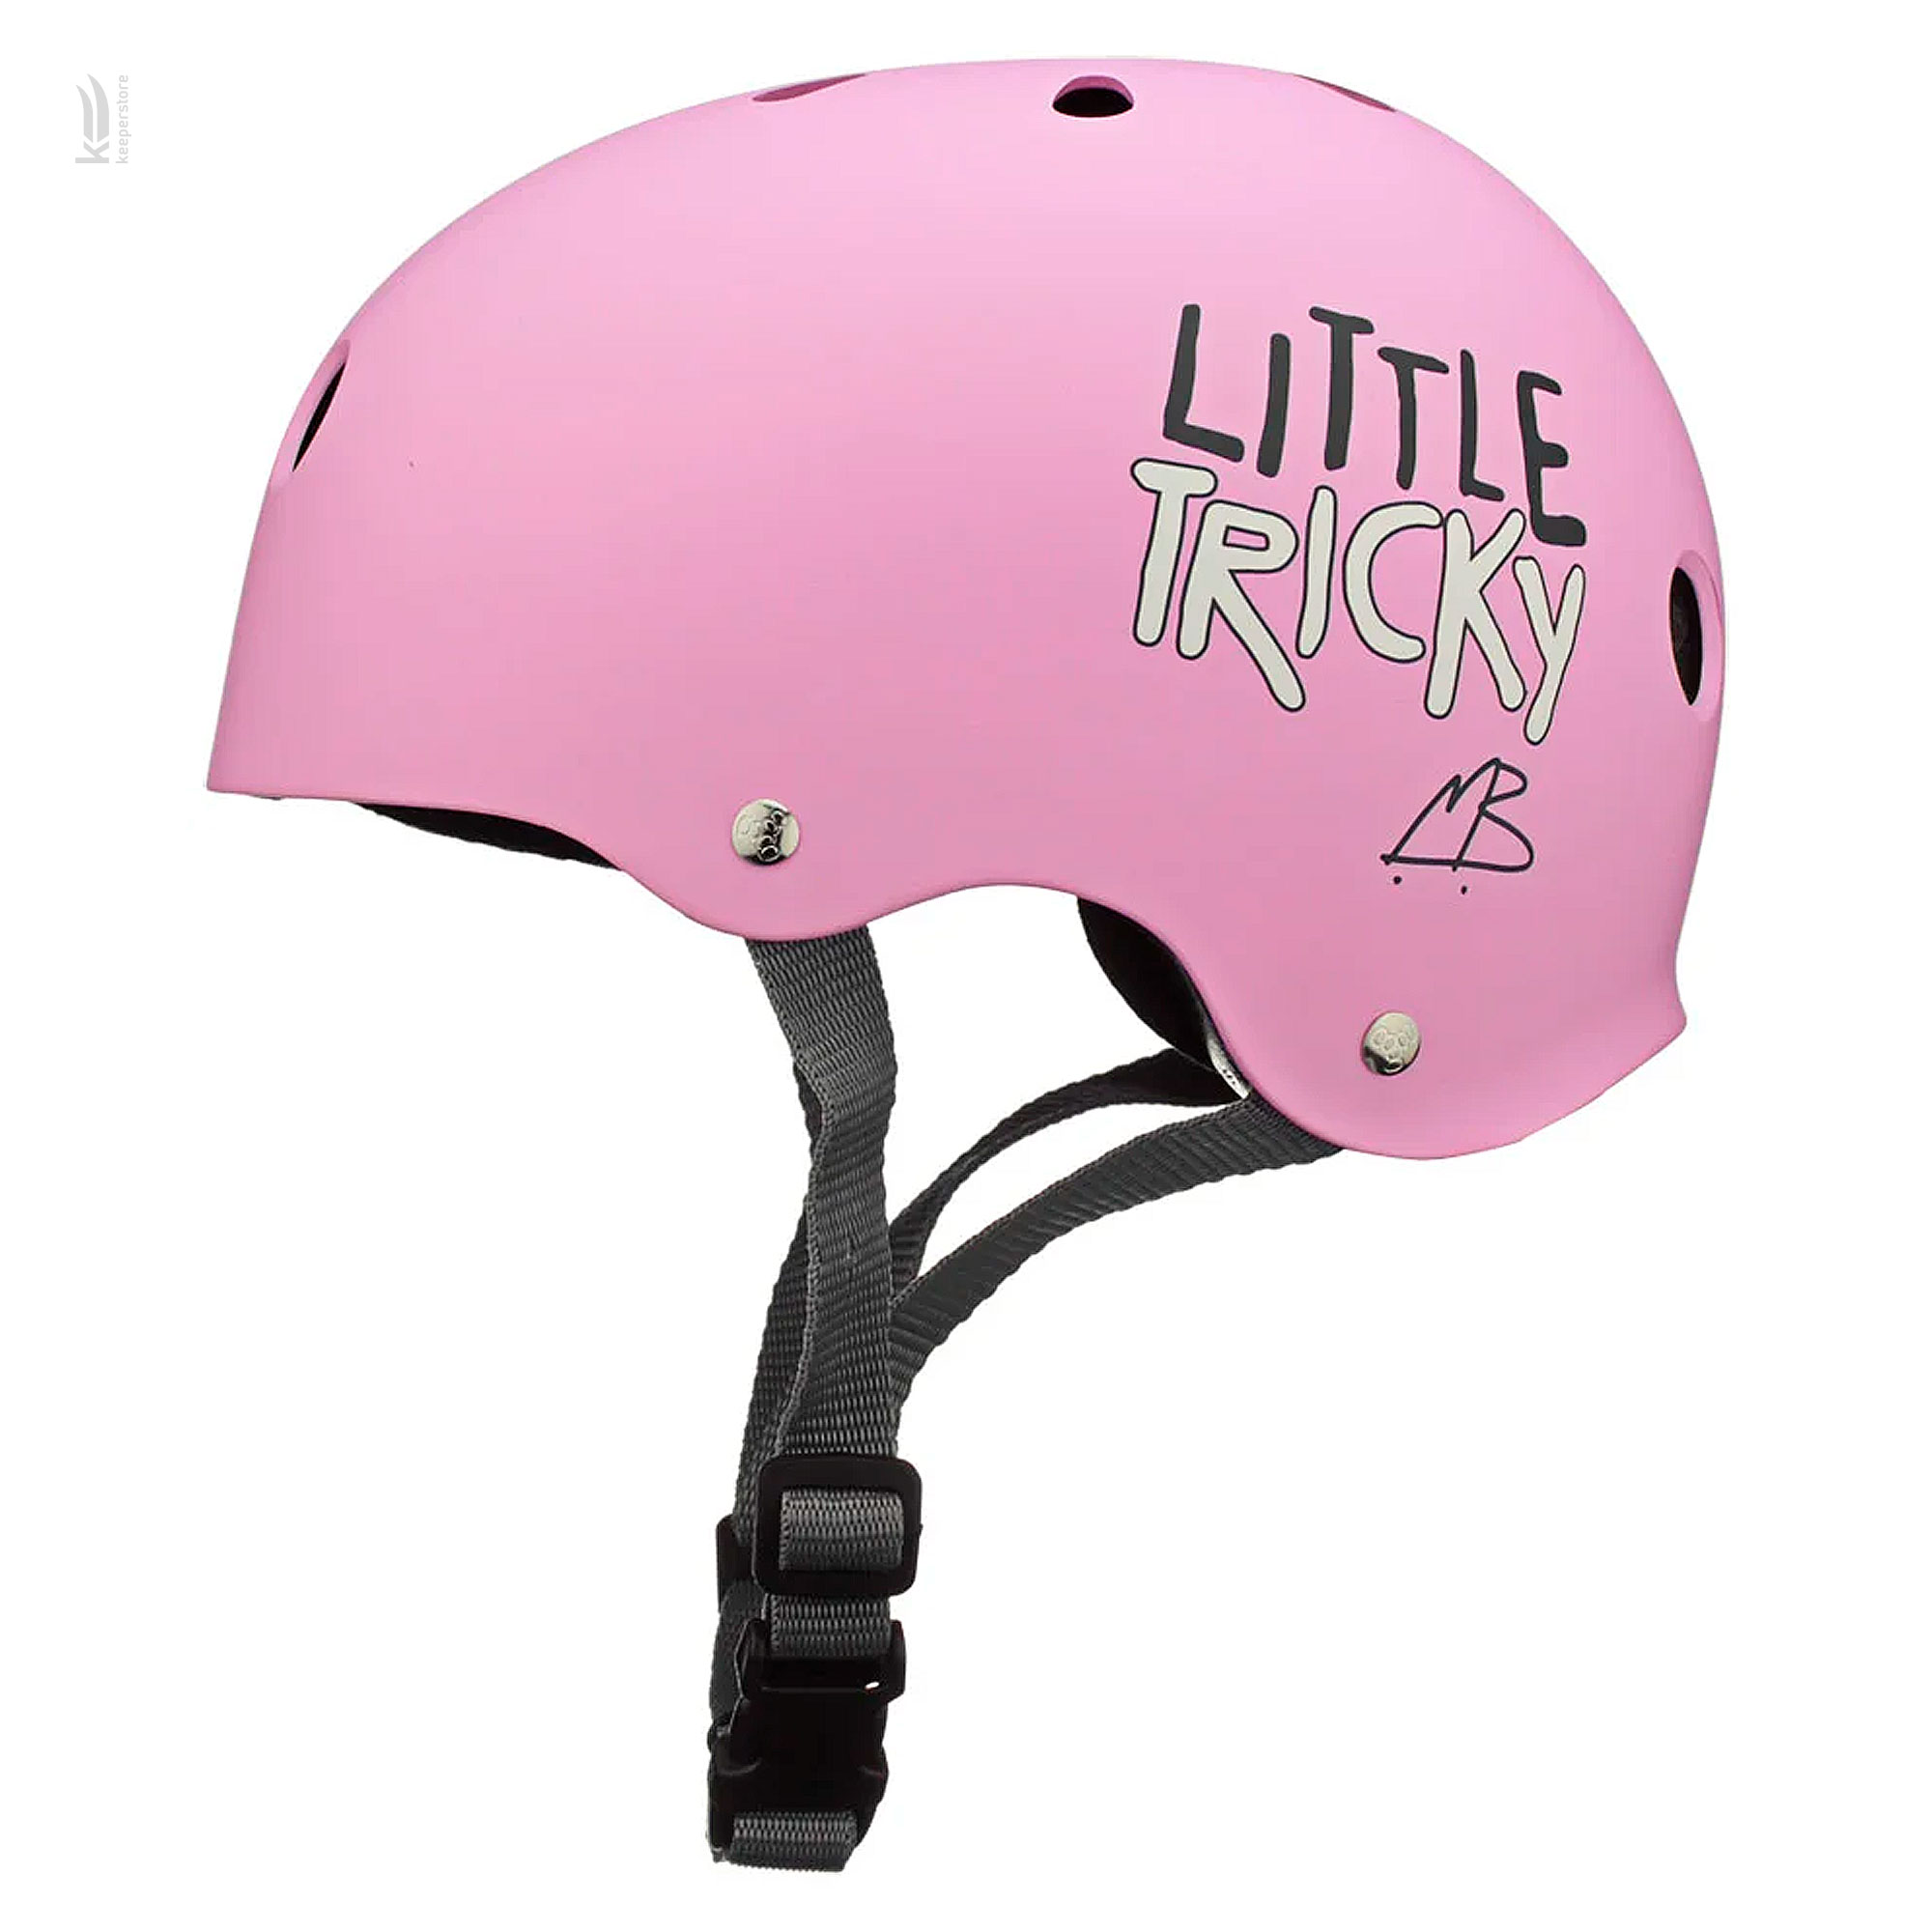 Характеристики шлем для скейтбординга Triple8 Little Tricky Pink Rubber